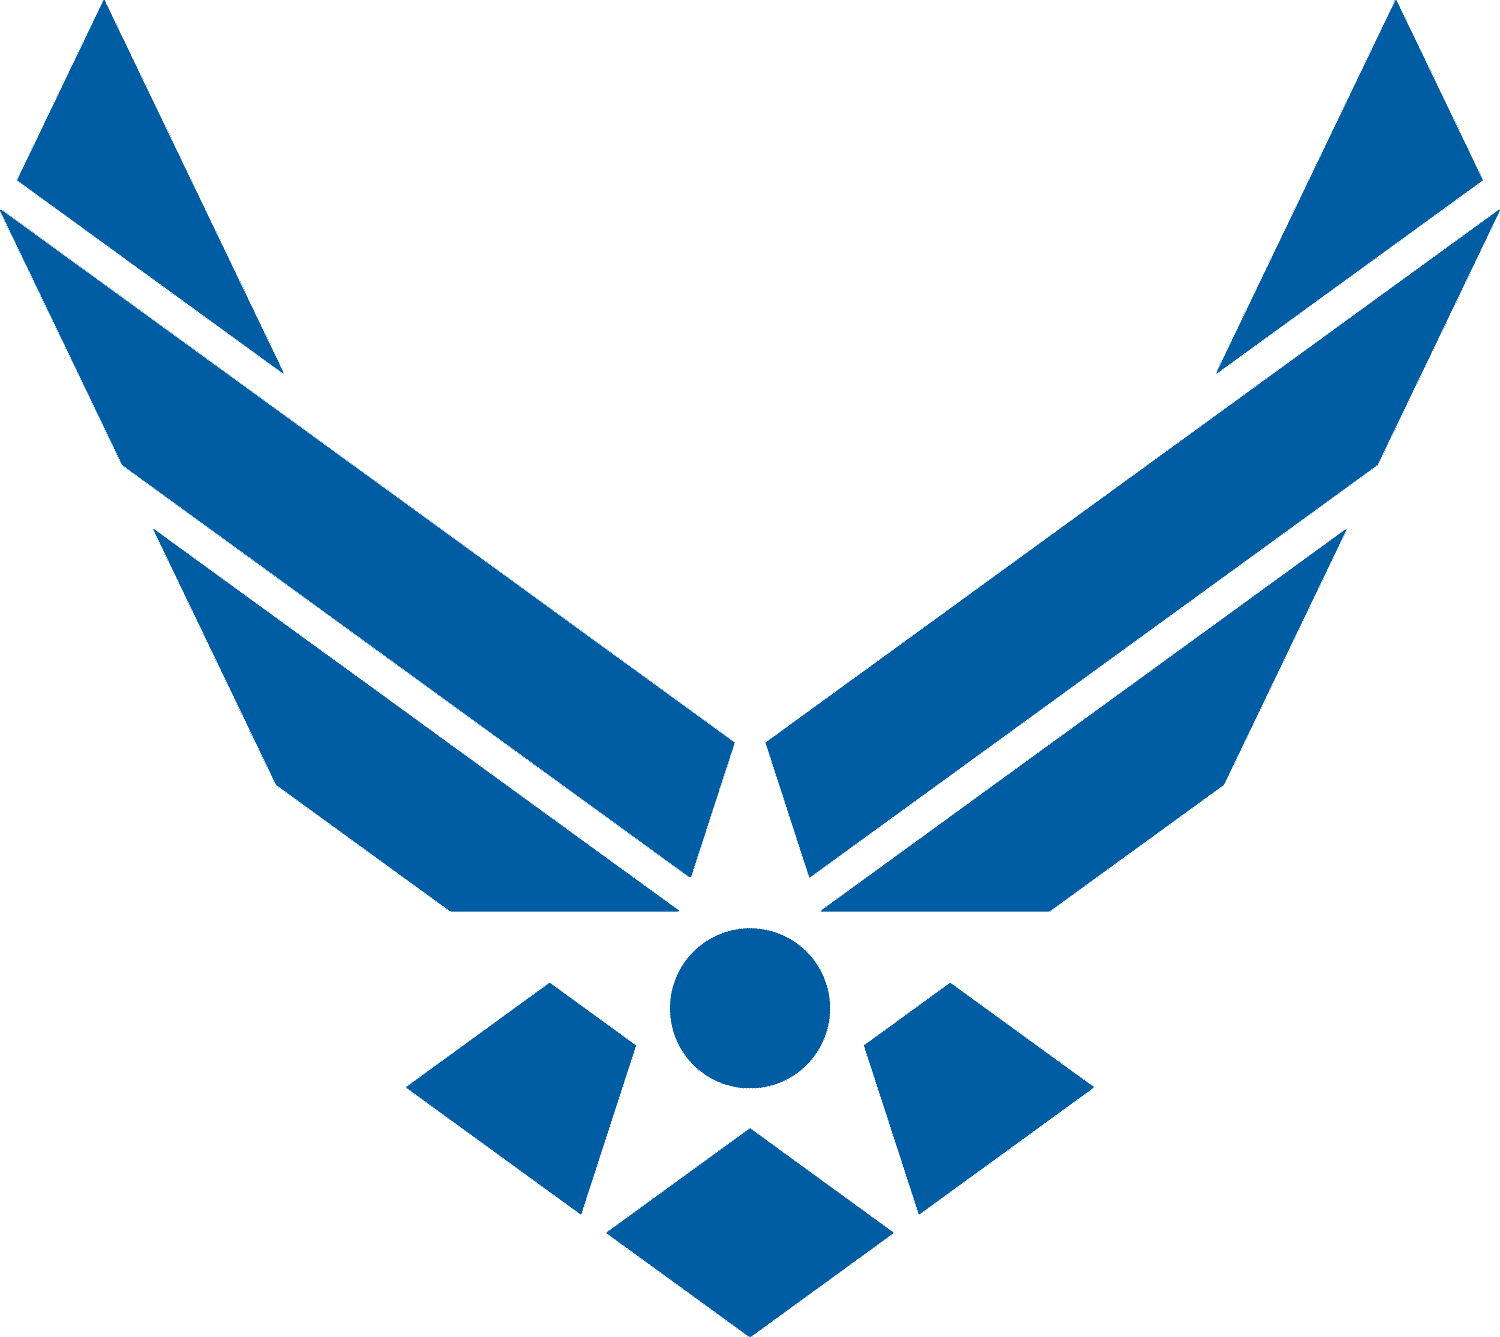 Air Force Trademark and Licensing Program - Air Force Symbol